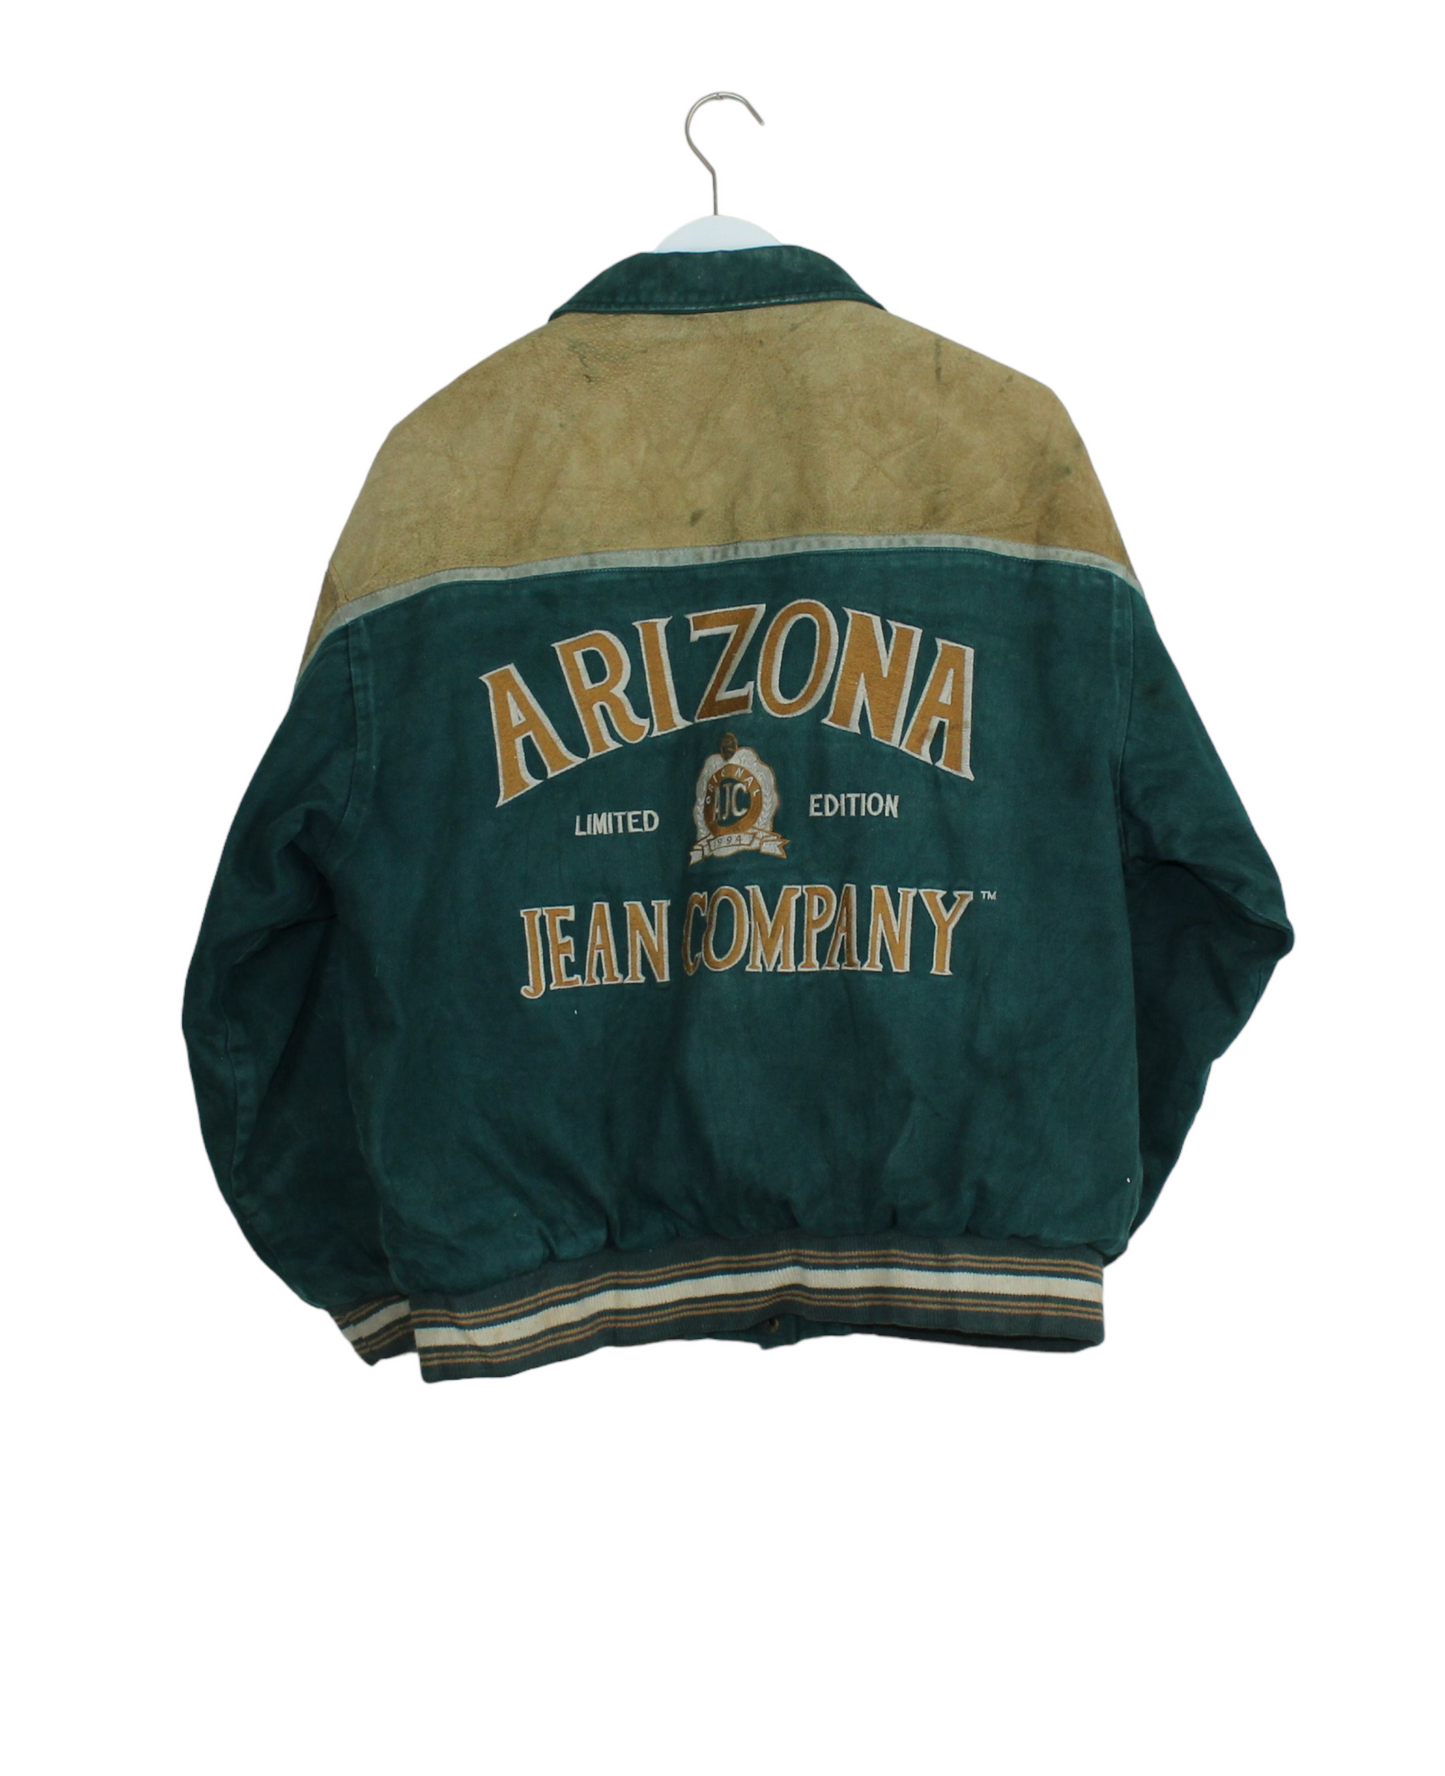 Arizona Jean Company leather jacket